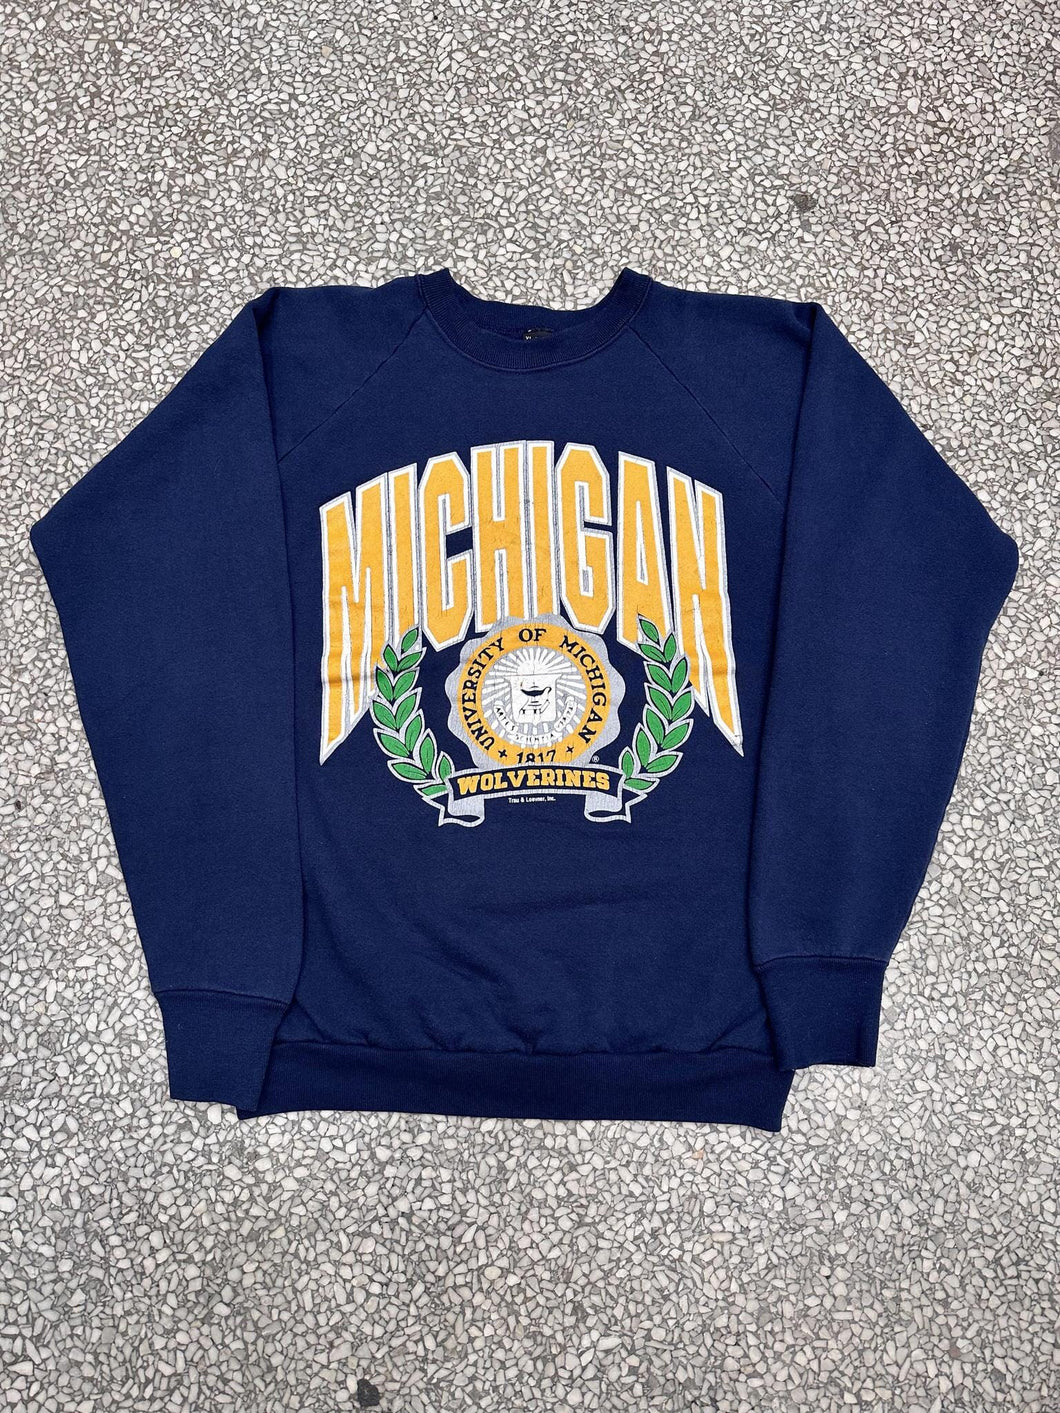 Michigan Wolverines Vintage 90s Crest Crewneck Faded Navy ABC Vintage 